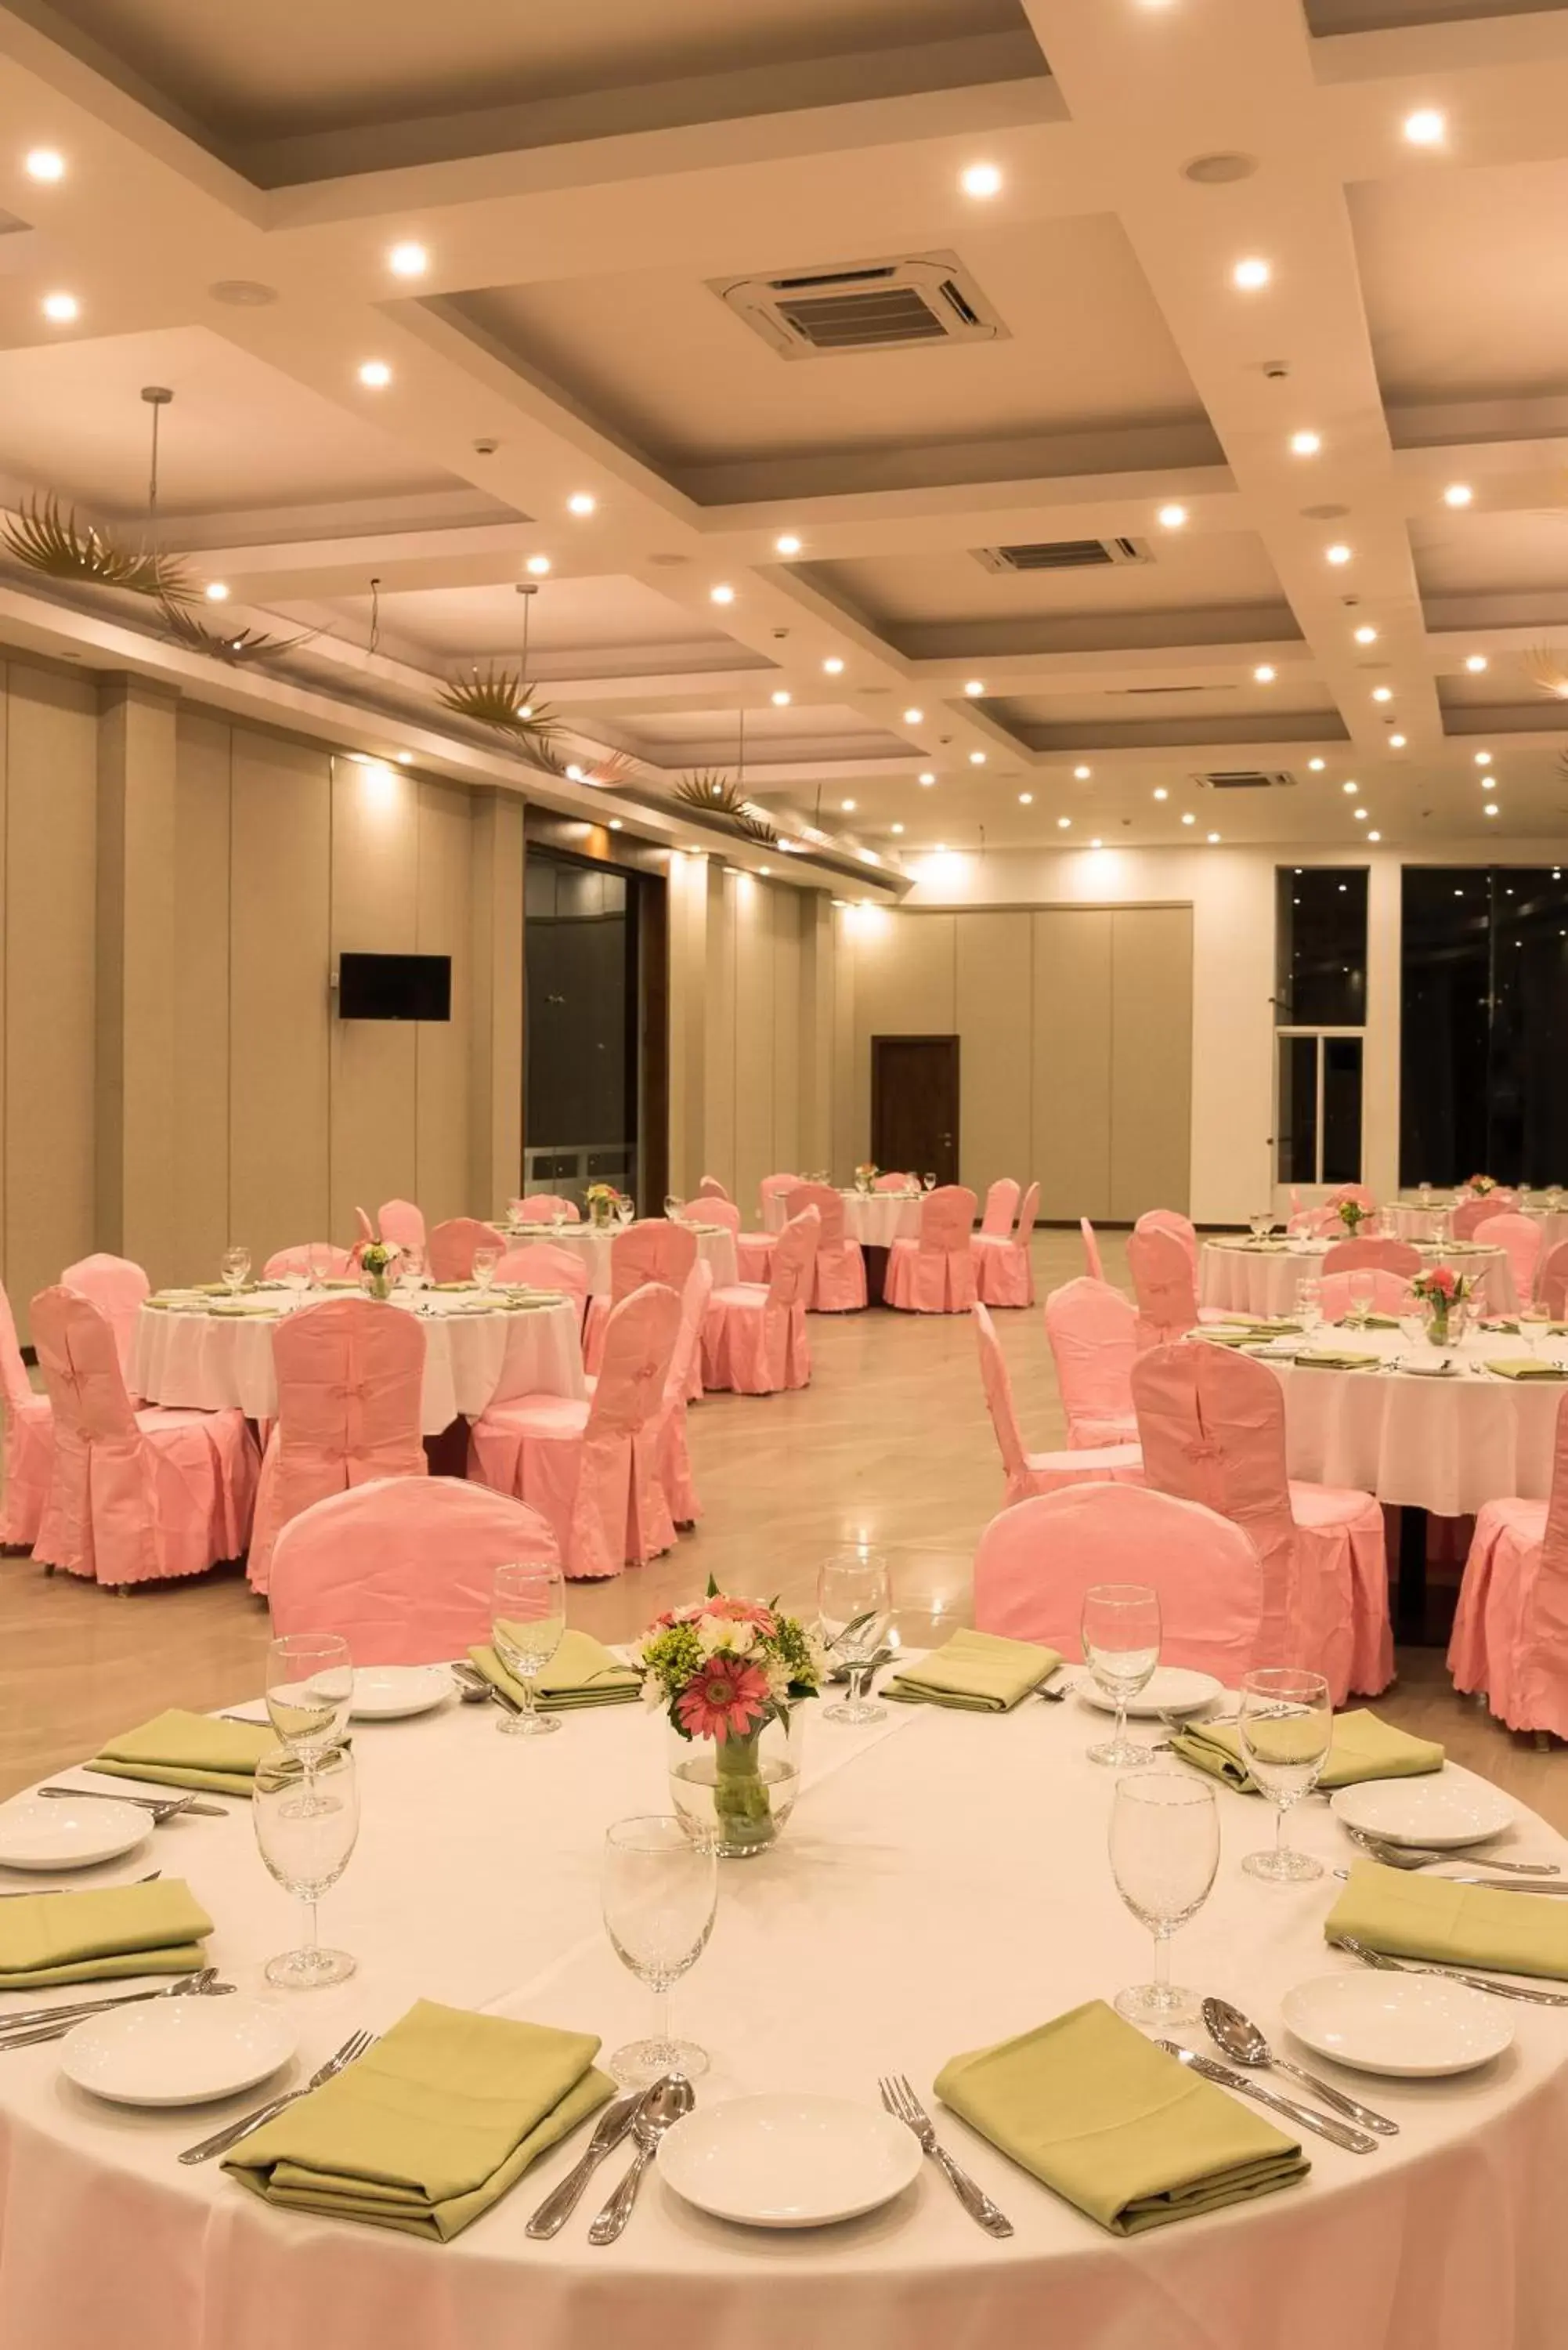 Banquet/Function facilities, Banquet Facilities in NorthGate Jaffna